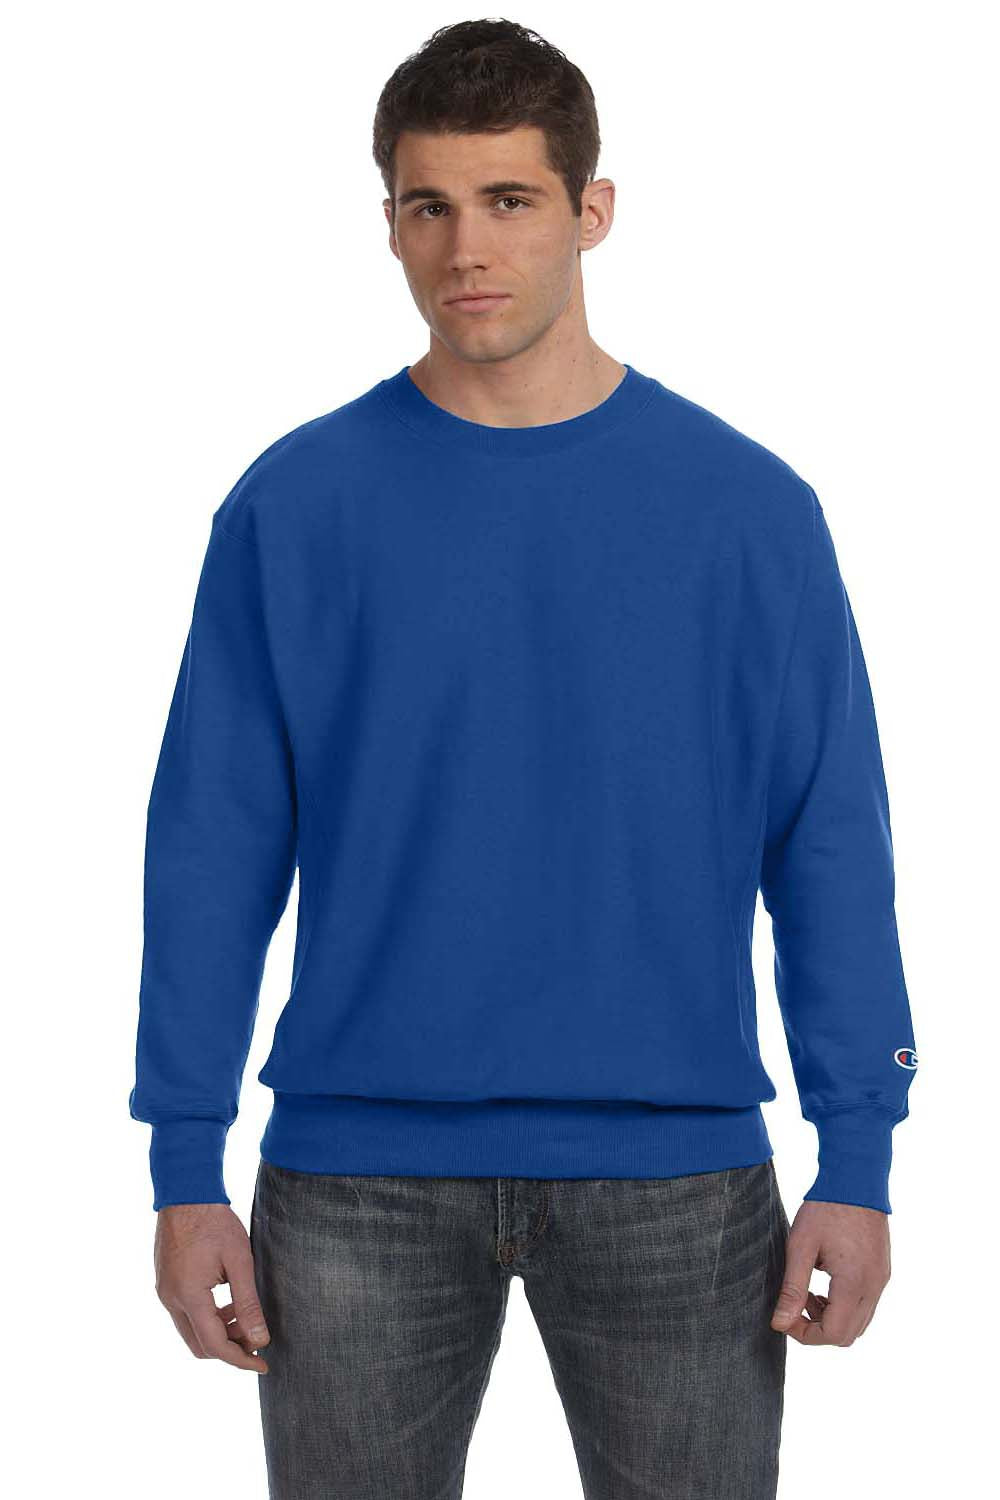 S149/S1049 Crewneck Athletic Champion Blue Sweatshirt — Royal Mens